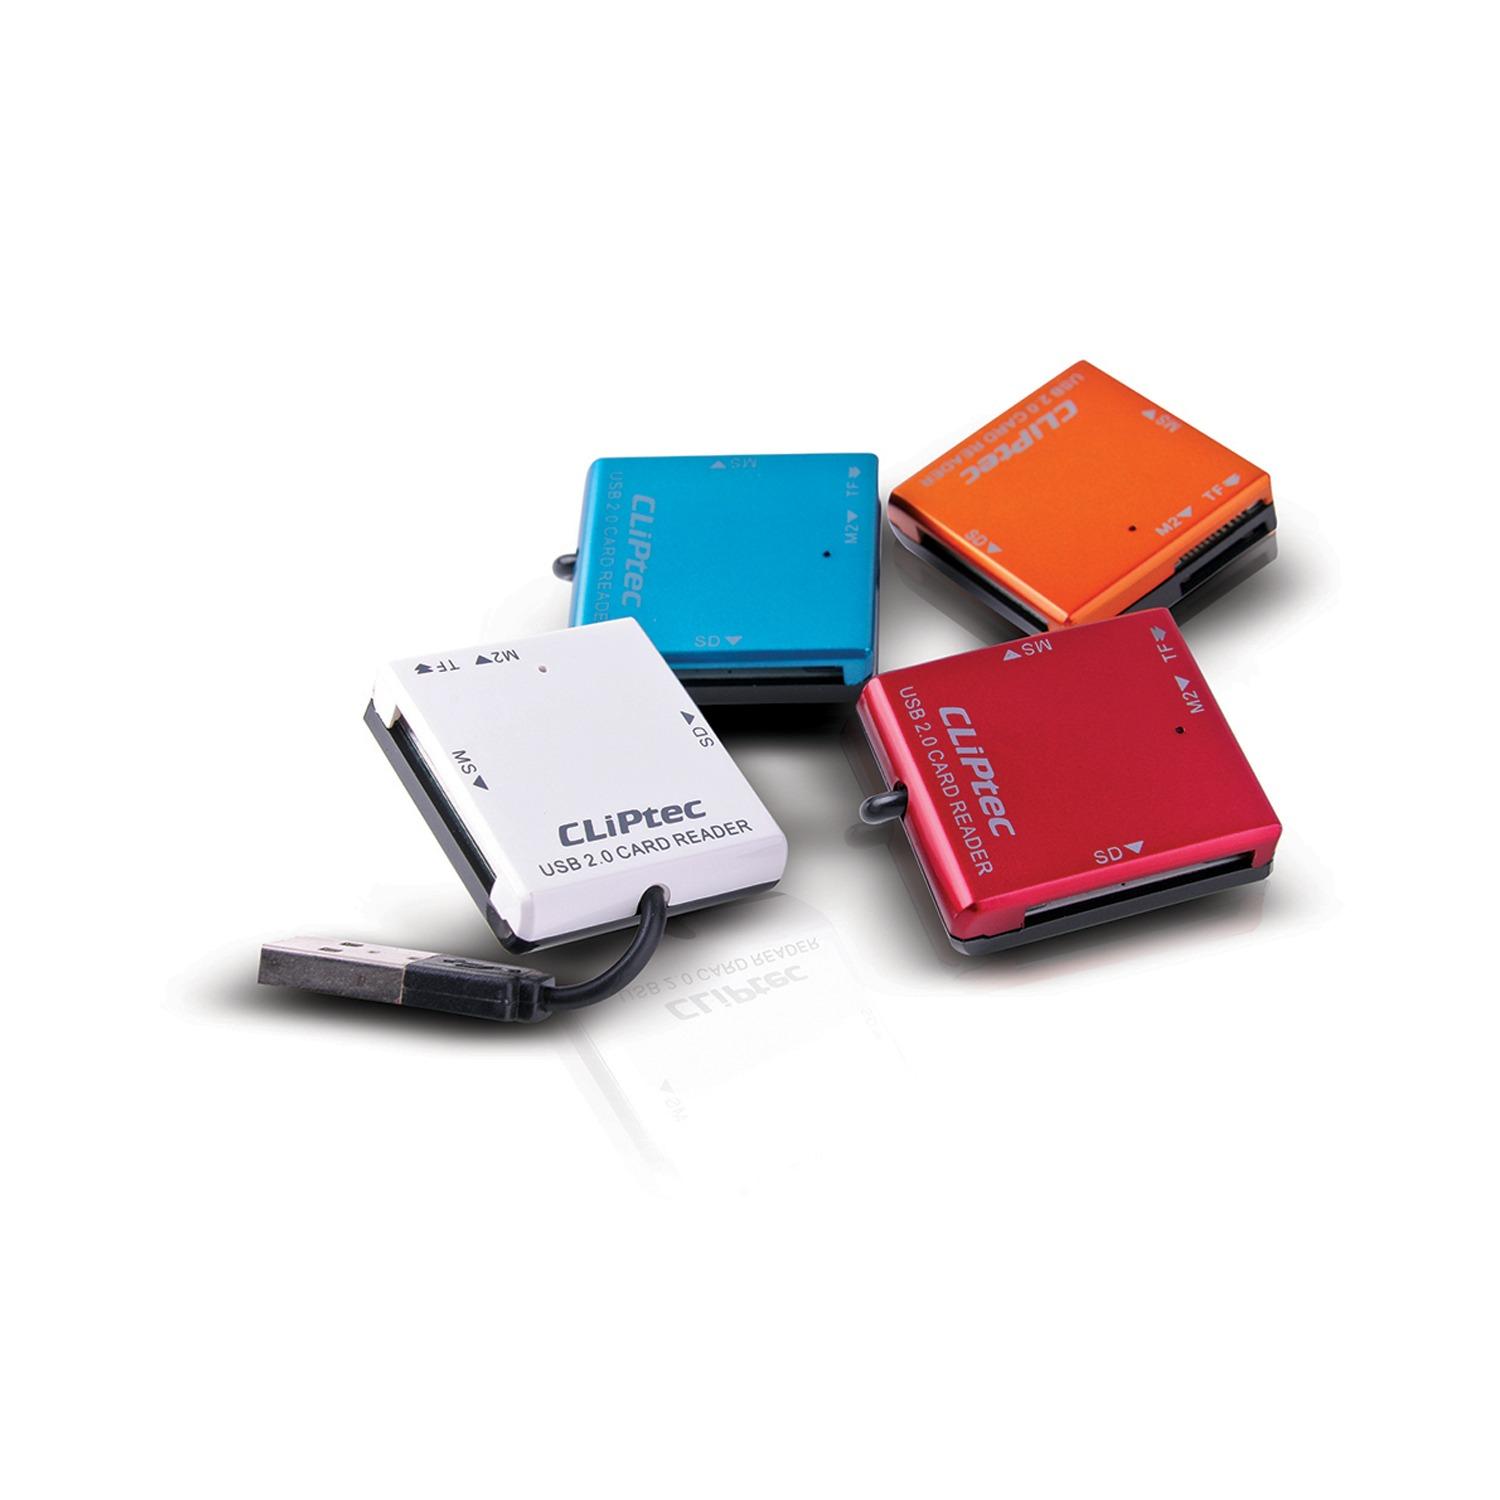 CLiPtec RZR507 card reader